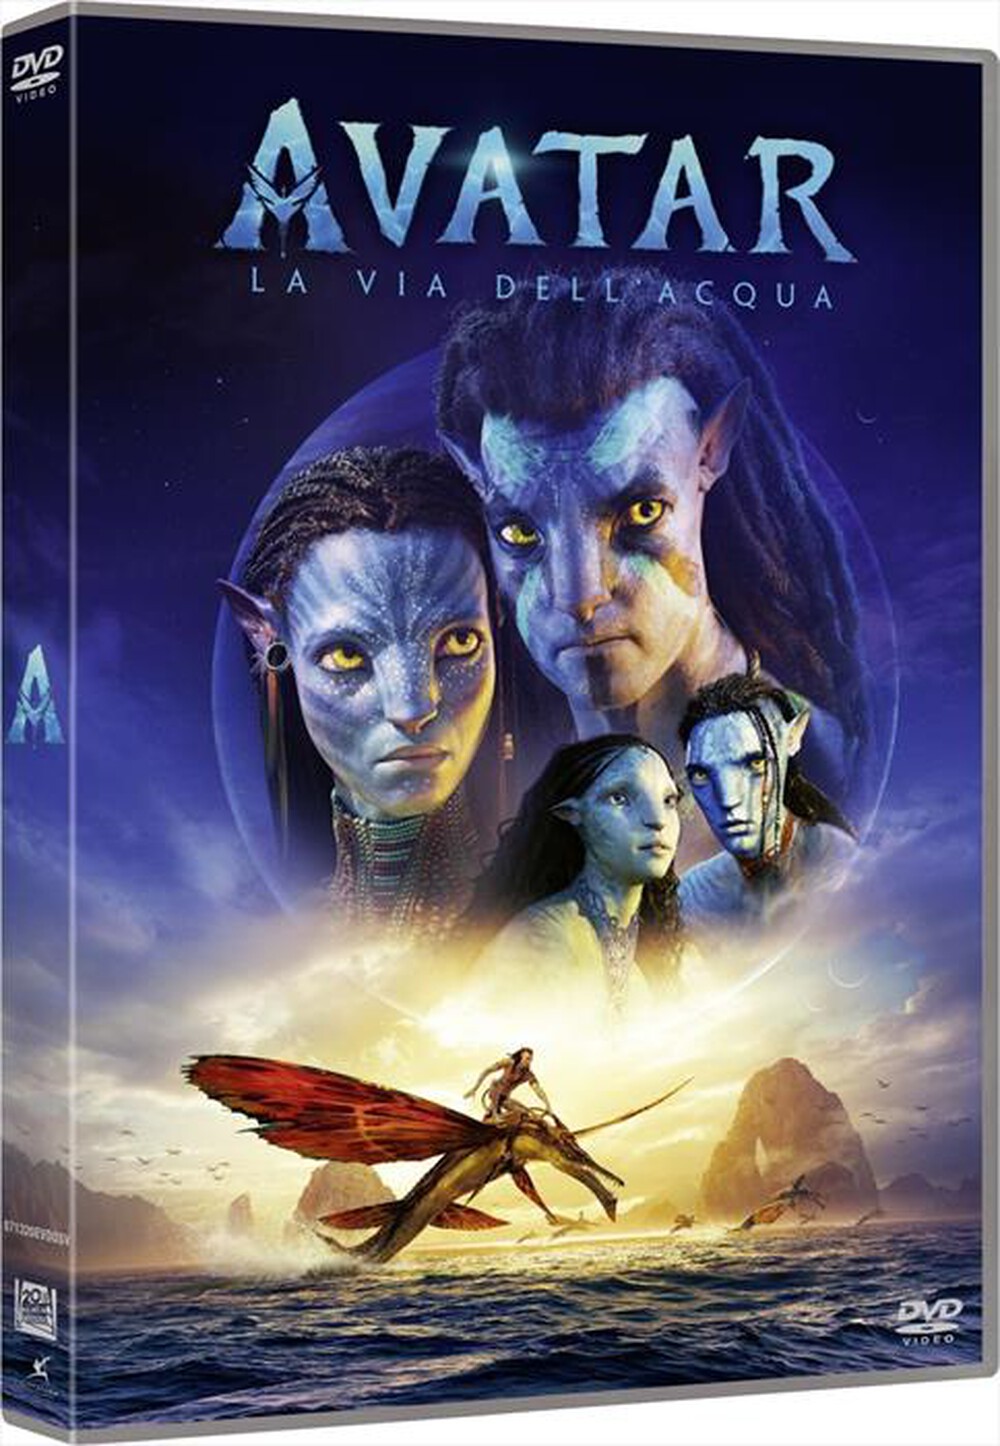 "WALT DISNEY - Avatar - La Via Dell'Acqua"